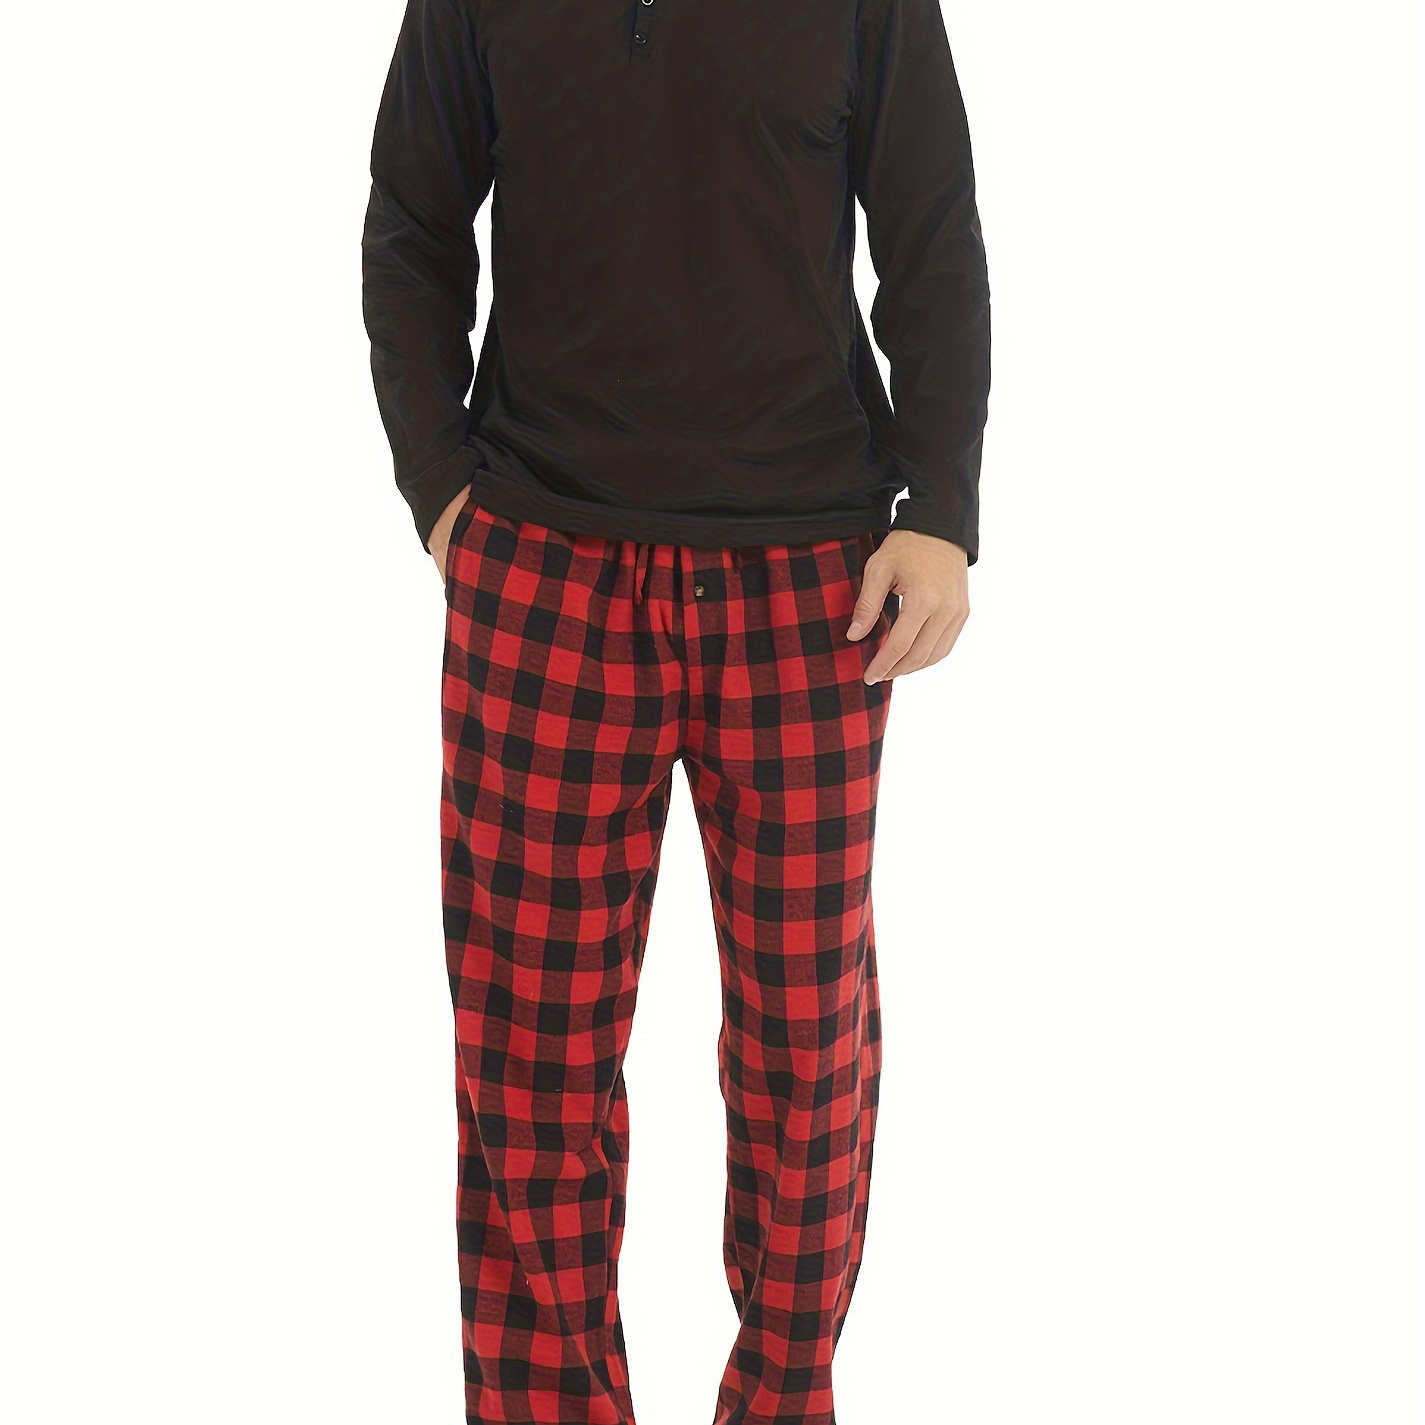 

2 Pcs Men's Pajama Sets, Black Long Sleeve & Plaid Pattern Pants, Comfortable & Gentle Style Pajamas For Men's Summer Cozy Loungewear